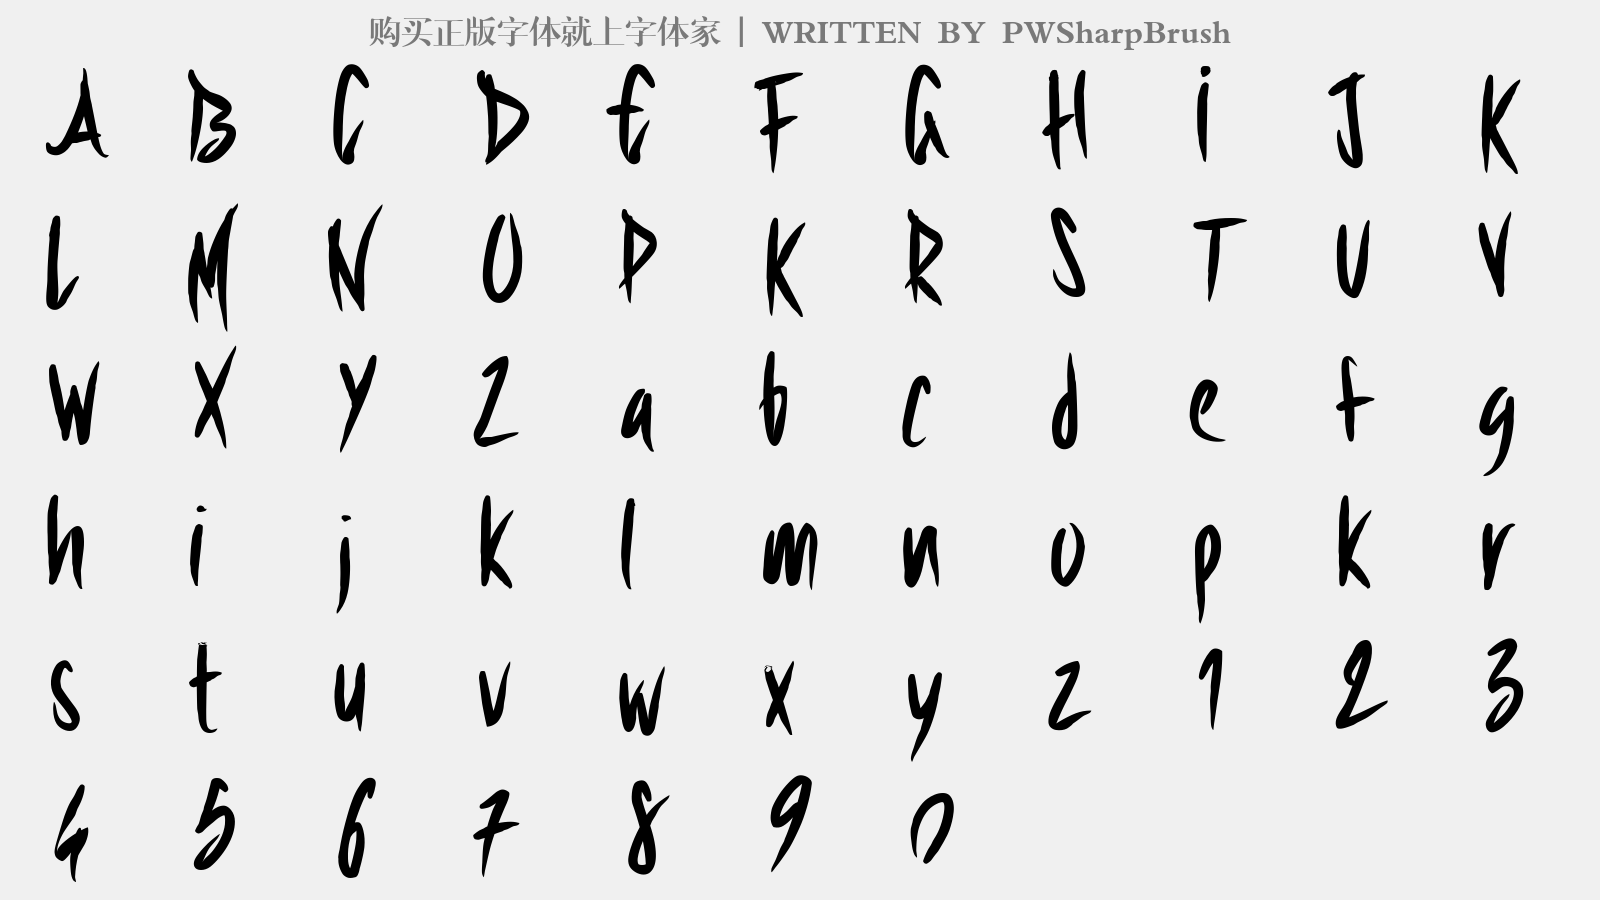 PWSharpBrush - 大写字母/小写字母/数字